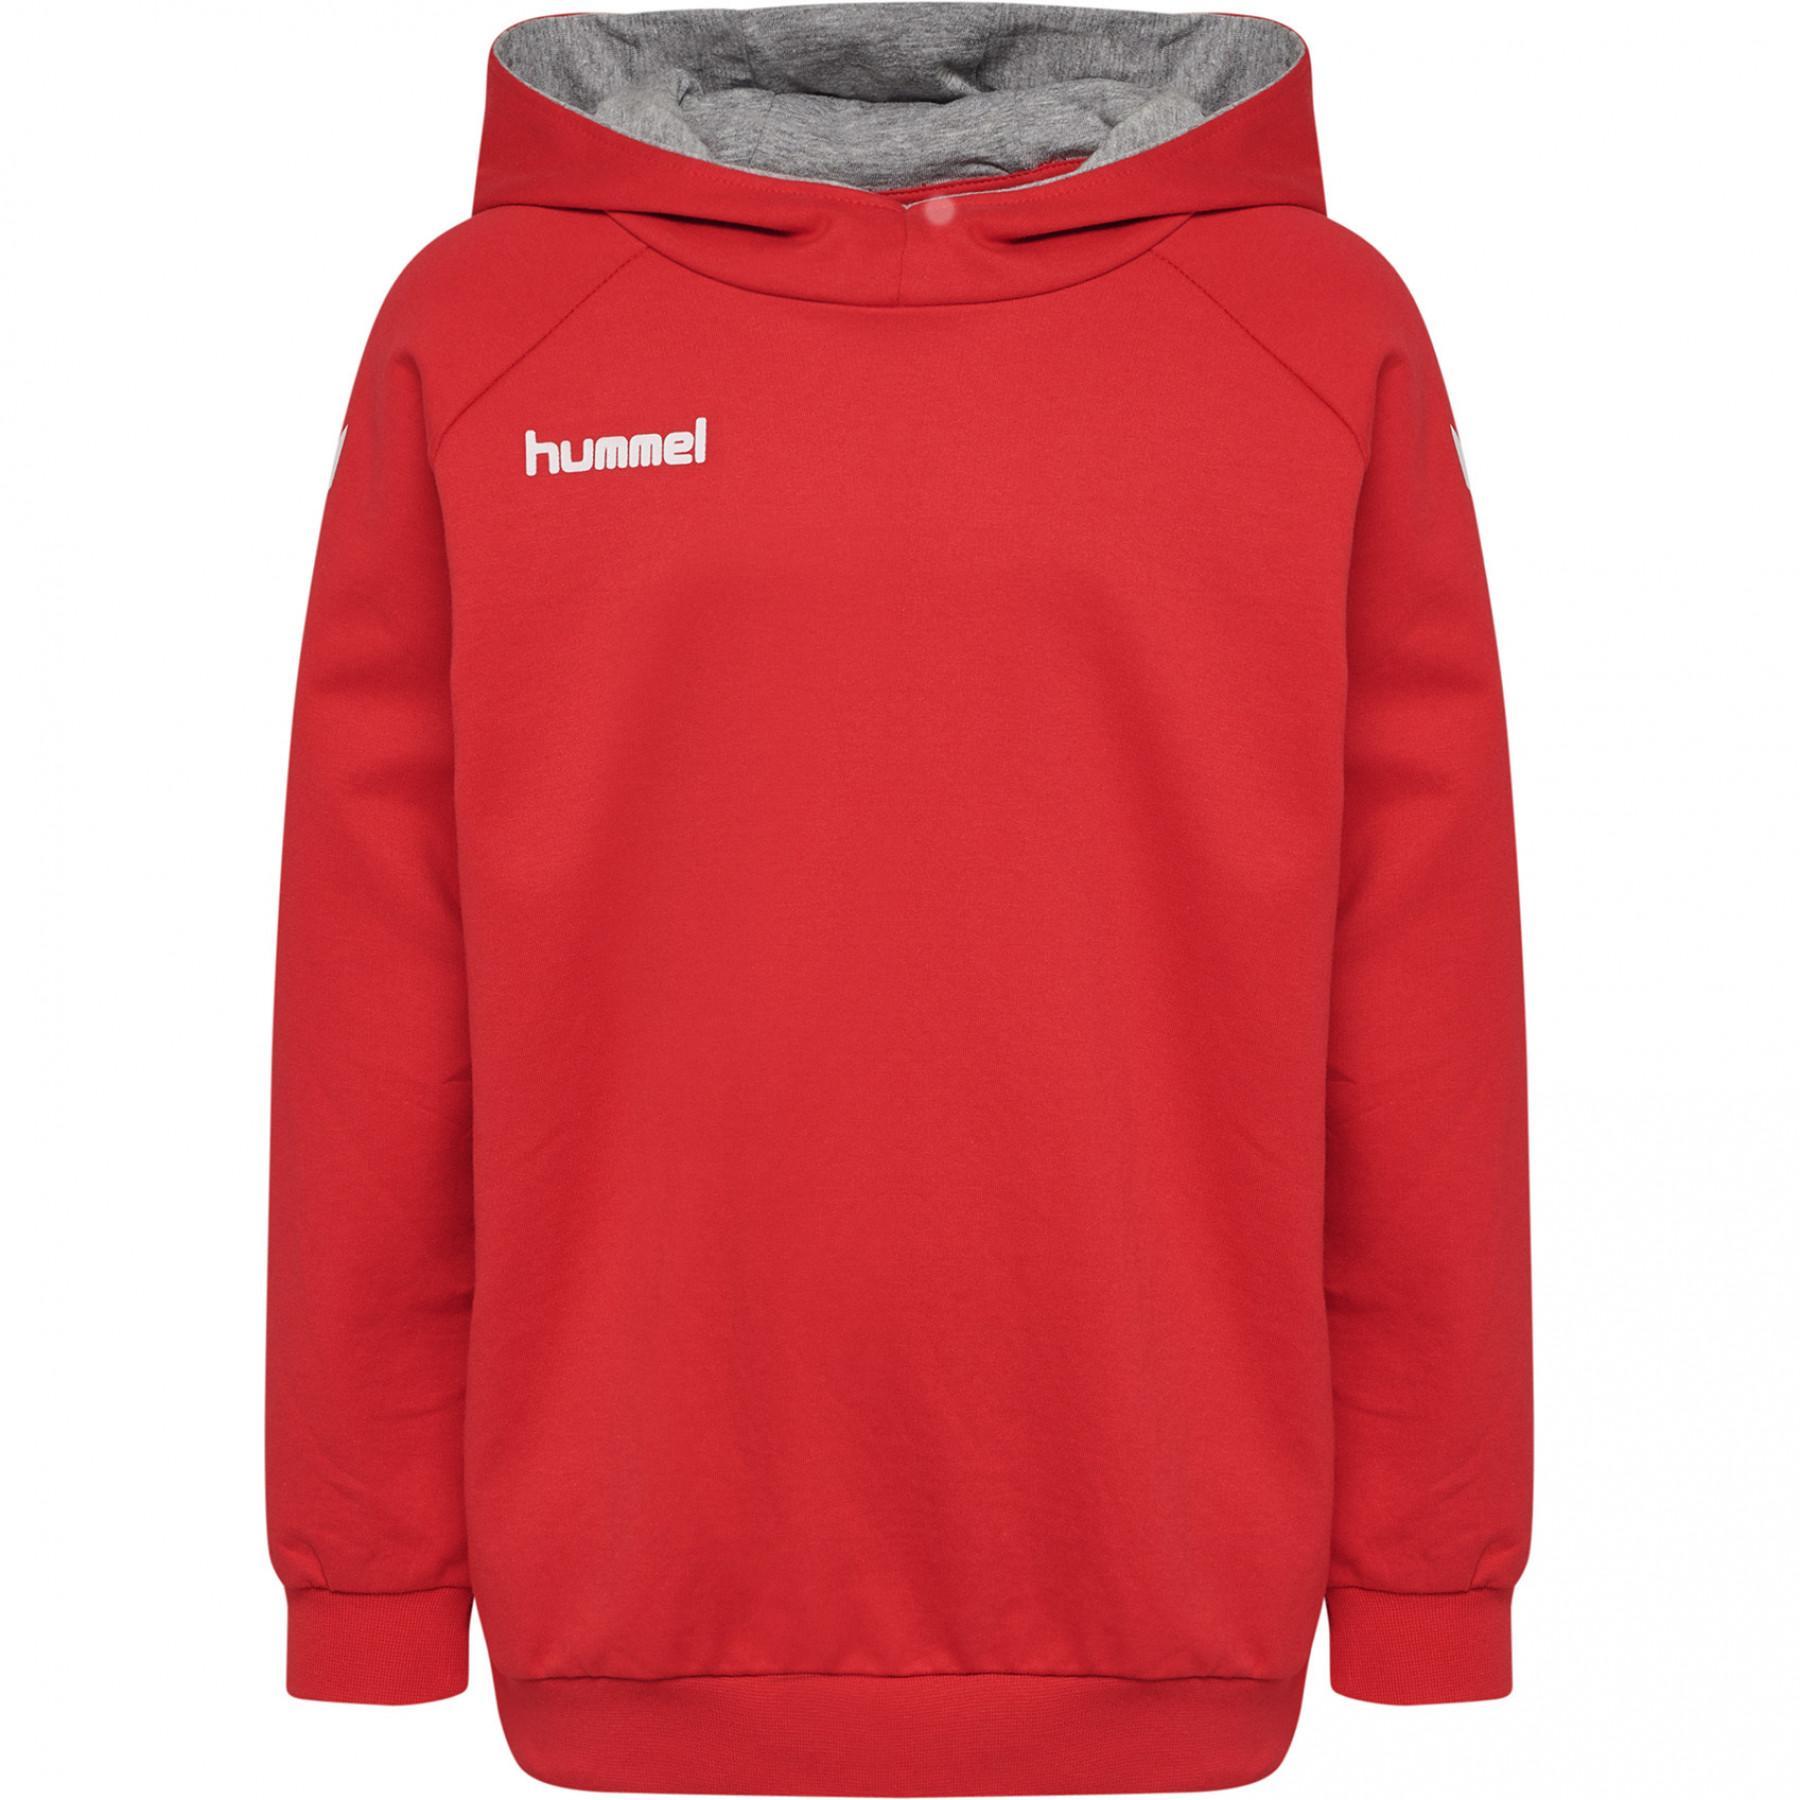 Hooded sweatshirt for children Hummel hmlGO cotton - Sweatshirts - Men's  wear - Handball wear